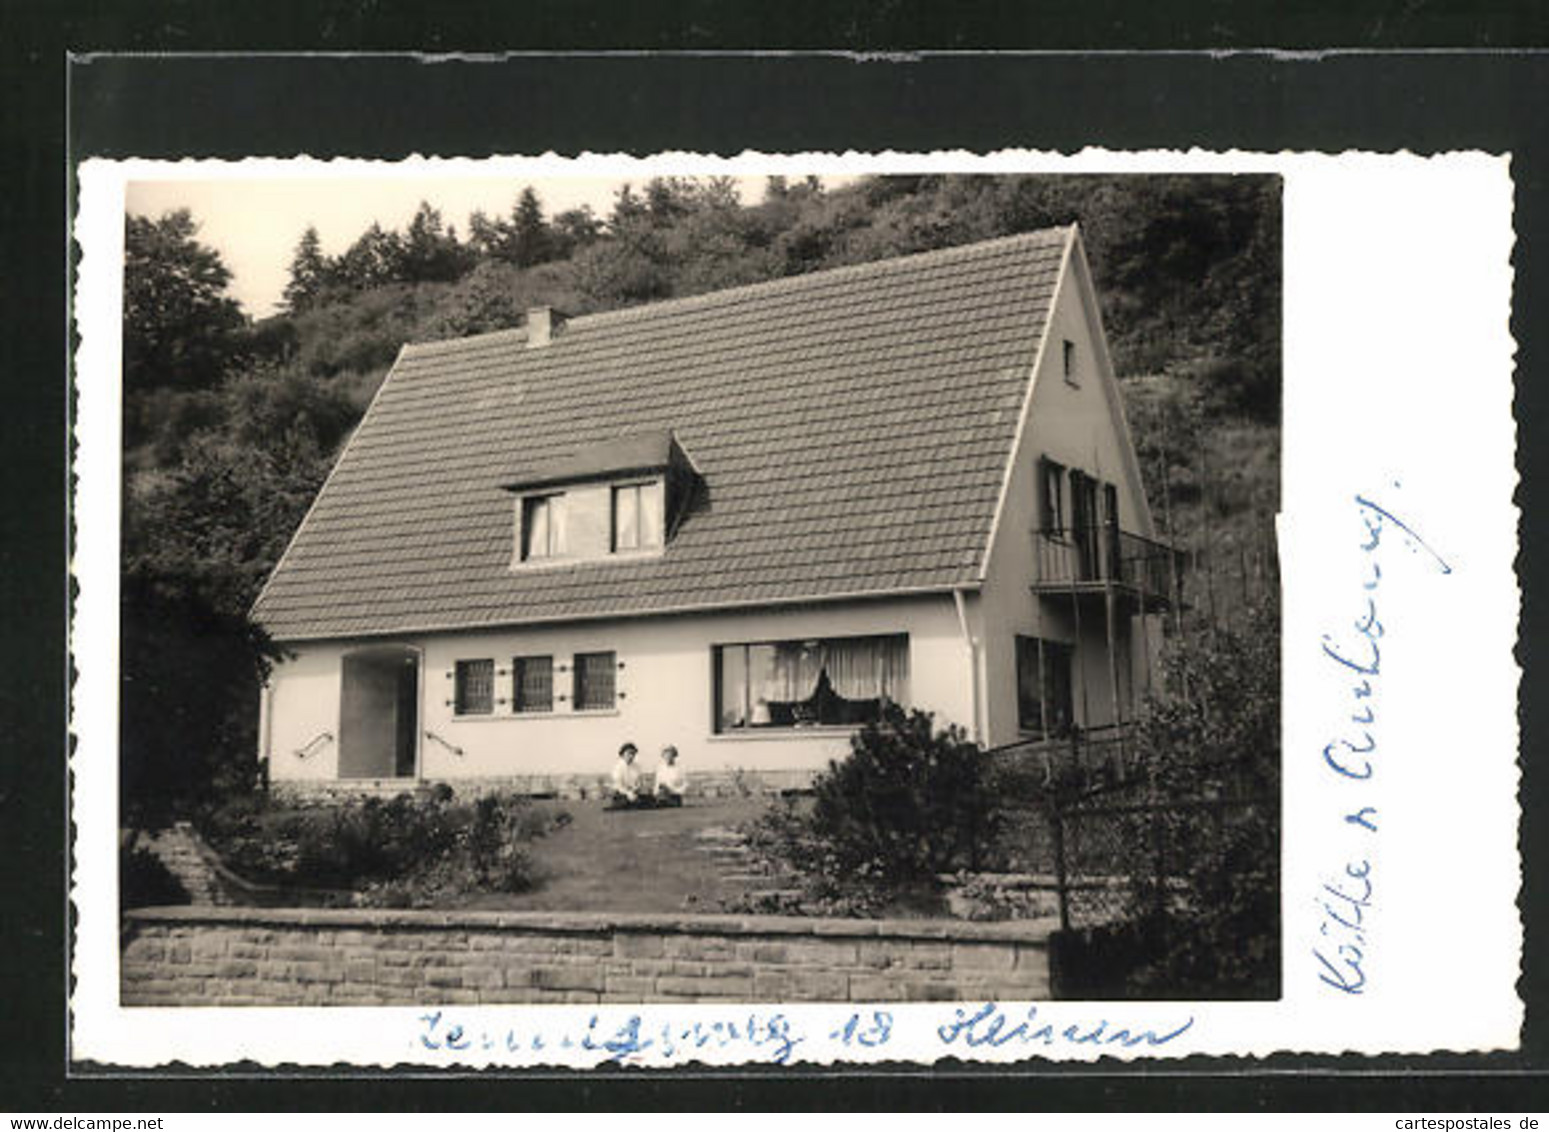 Foto-AK Bad Honnef, Haus, Strasse Zennigsweg 18 1953 - Bad Honnef